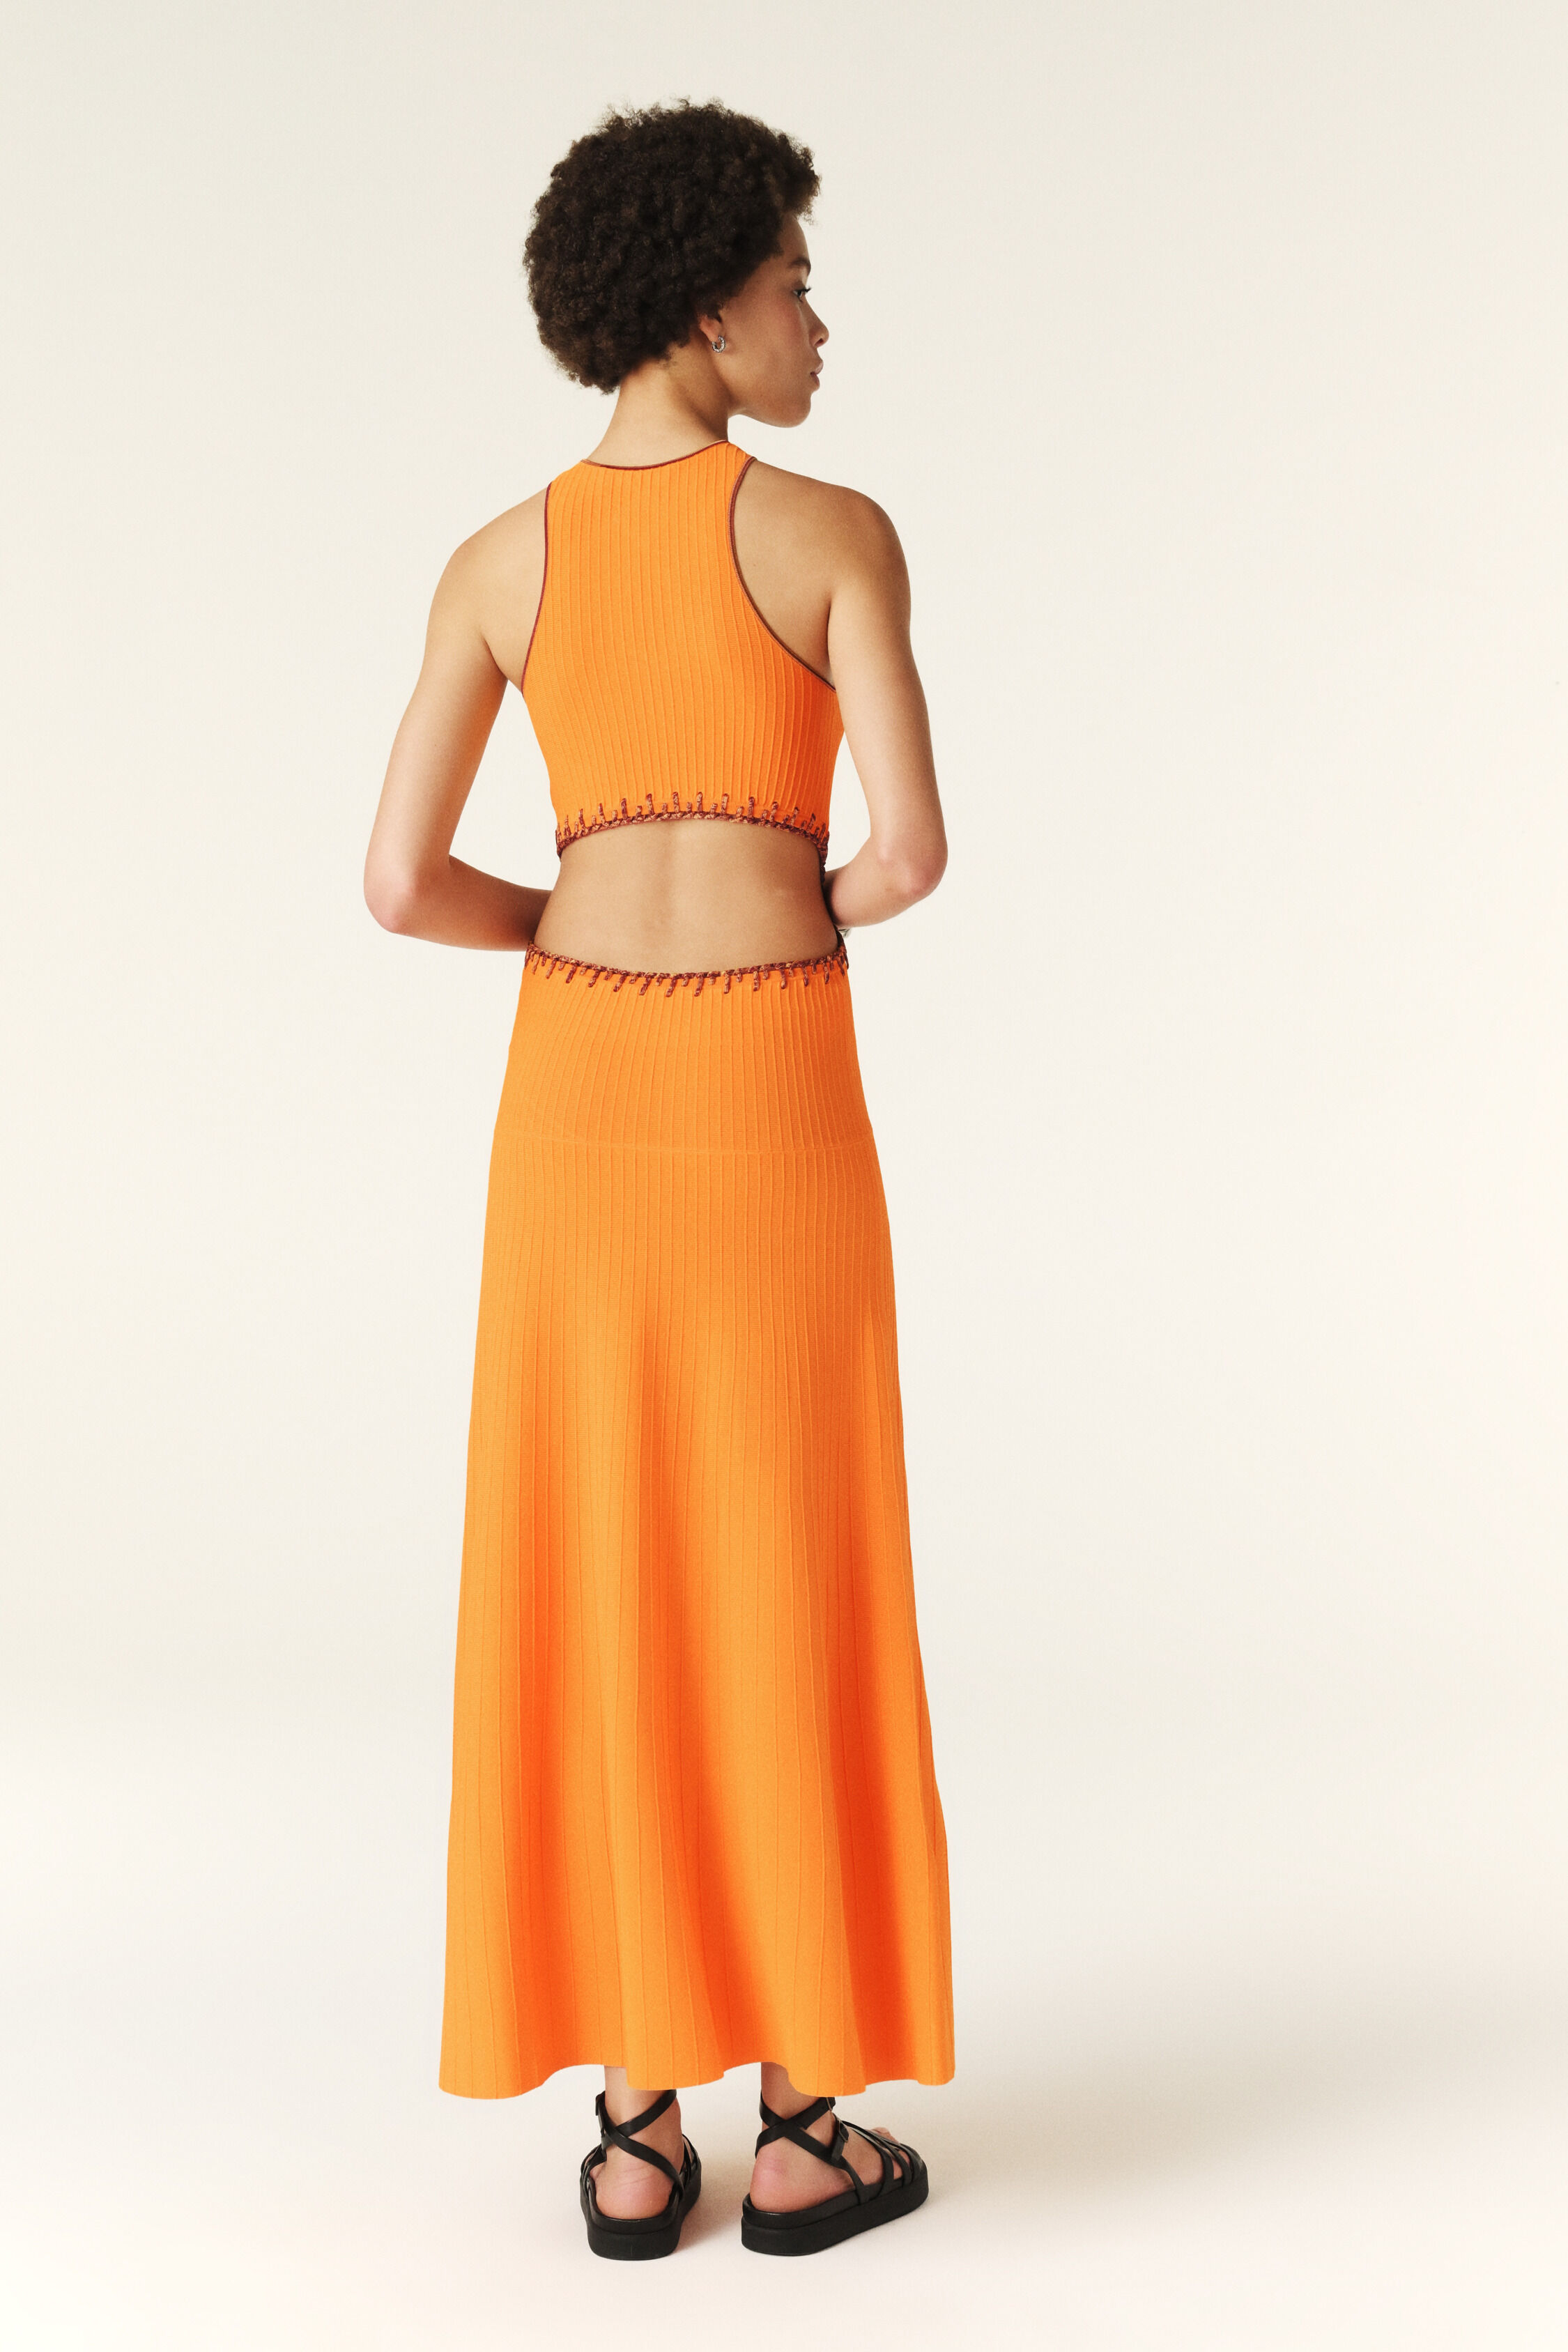 Baamp;Sh cut-out detail long flared dress - Orange